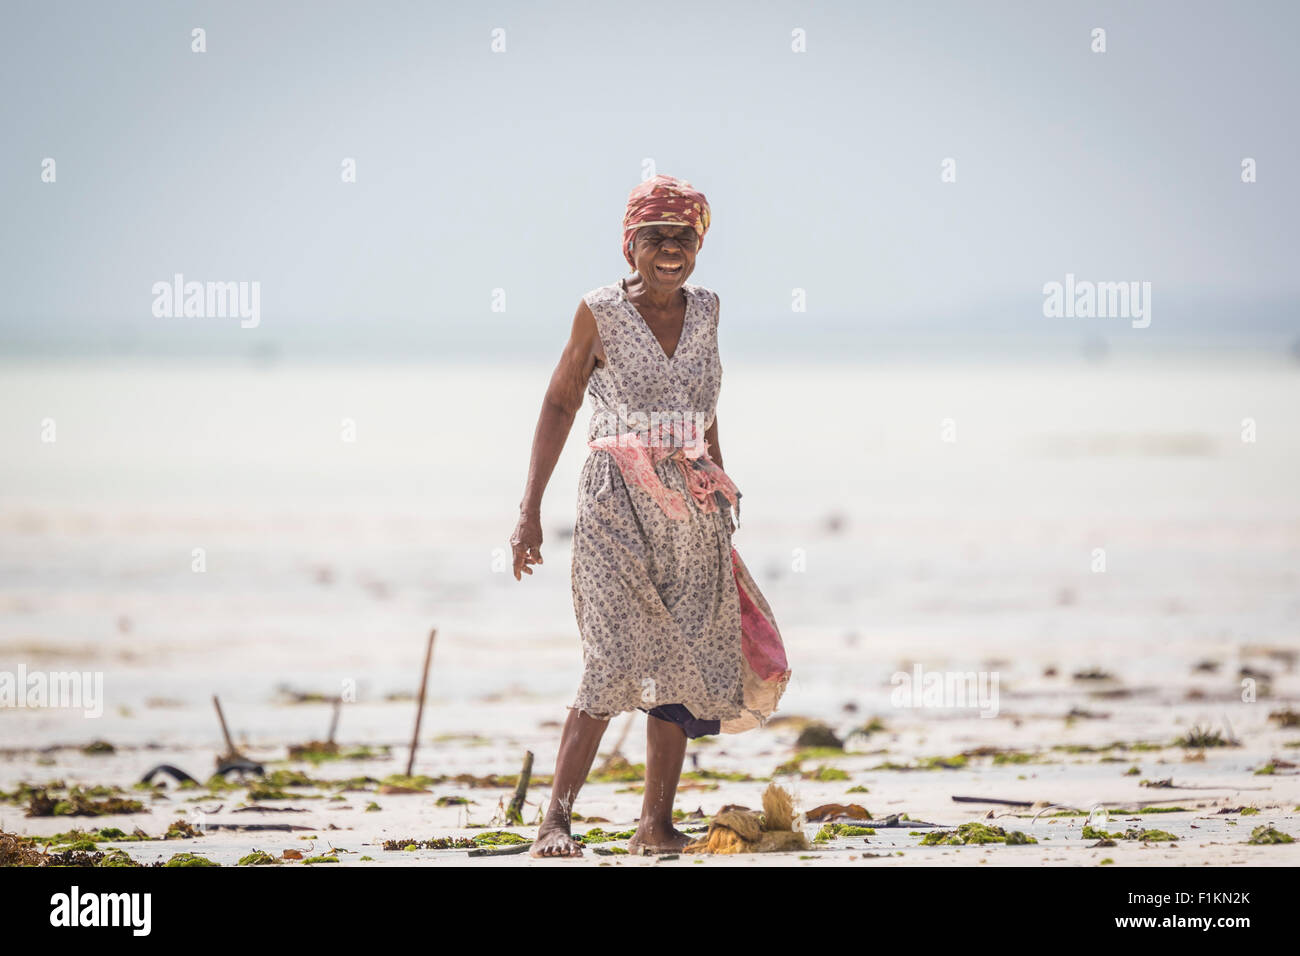 Zanzibar, Tanzania - January 21 2015. Women harvest the sea weed for soap, cosmetics and medicin. The rising water temperature d Stock Photo